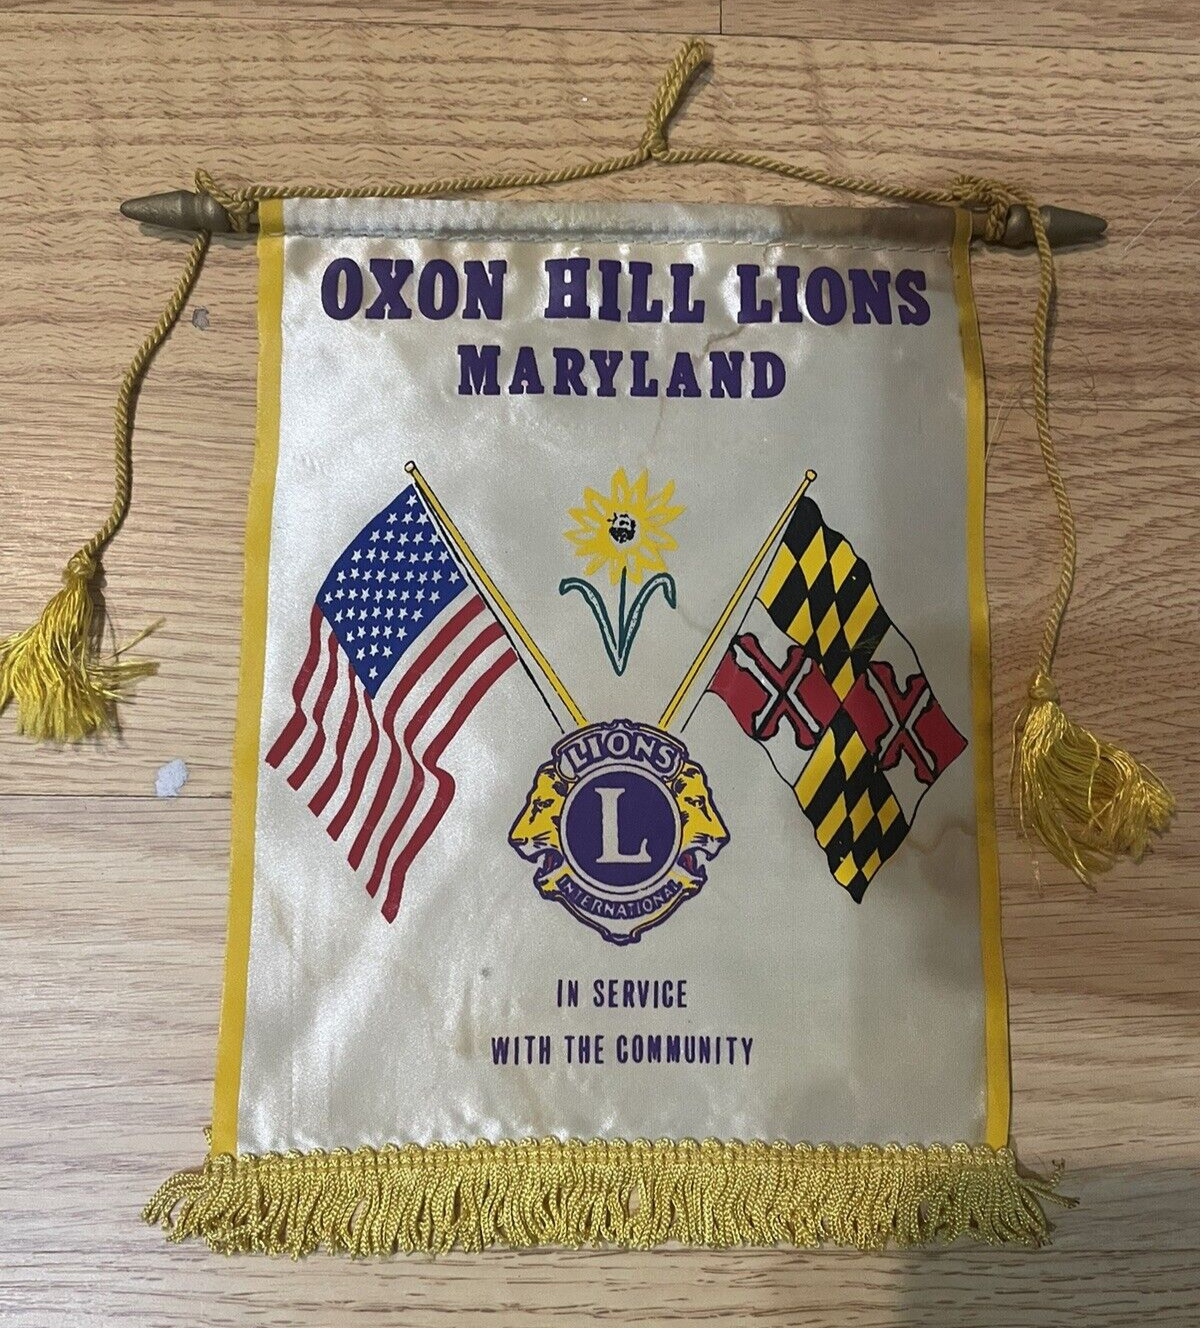 Vintage Lions Club Banner Flag Maryland Oxon Hills